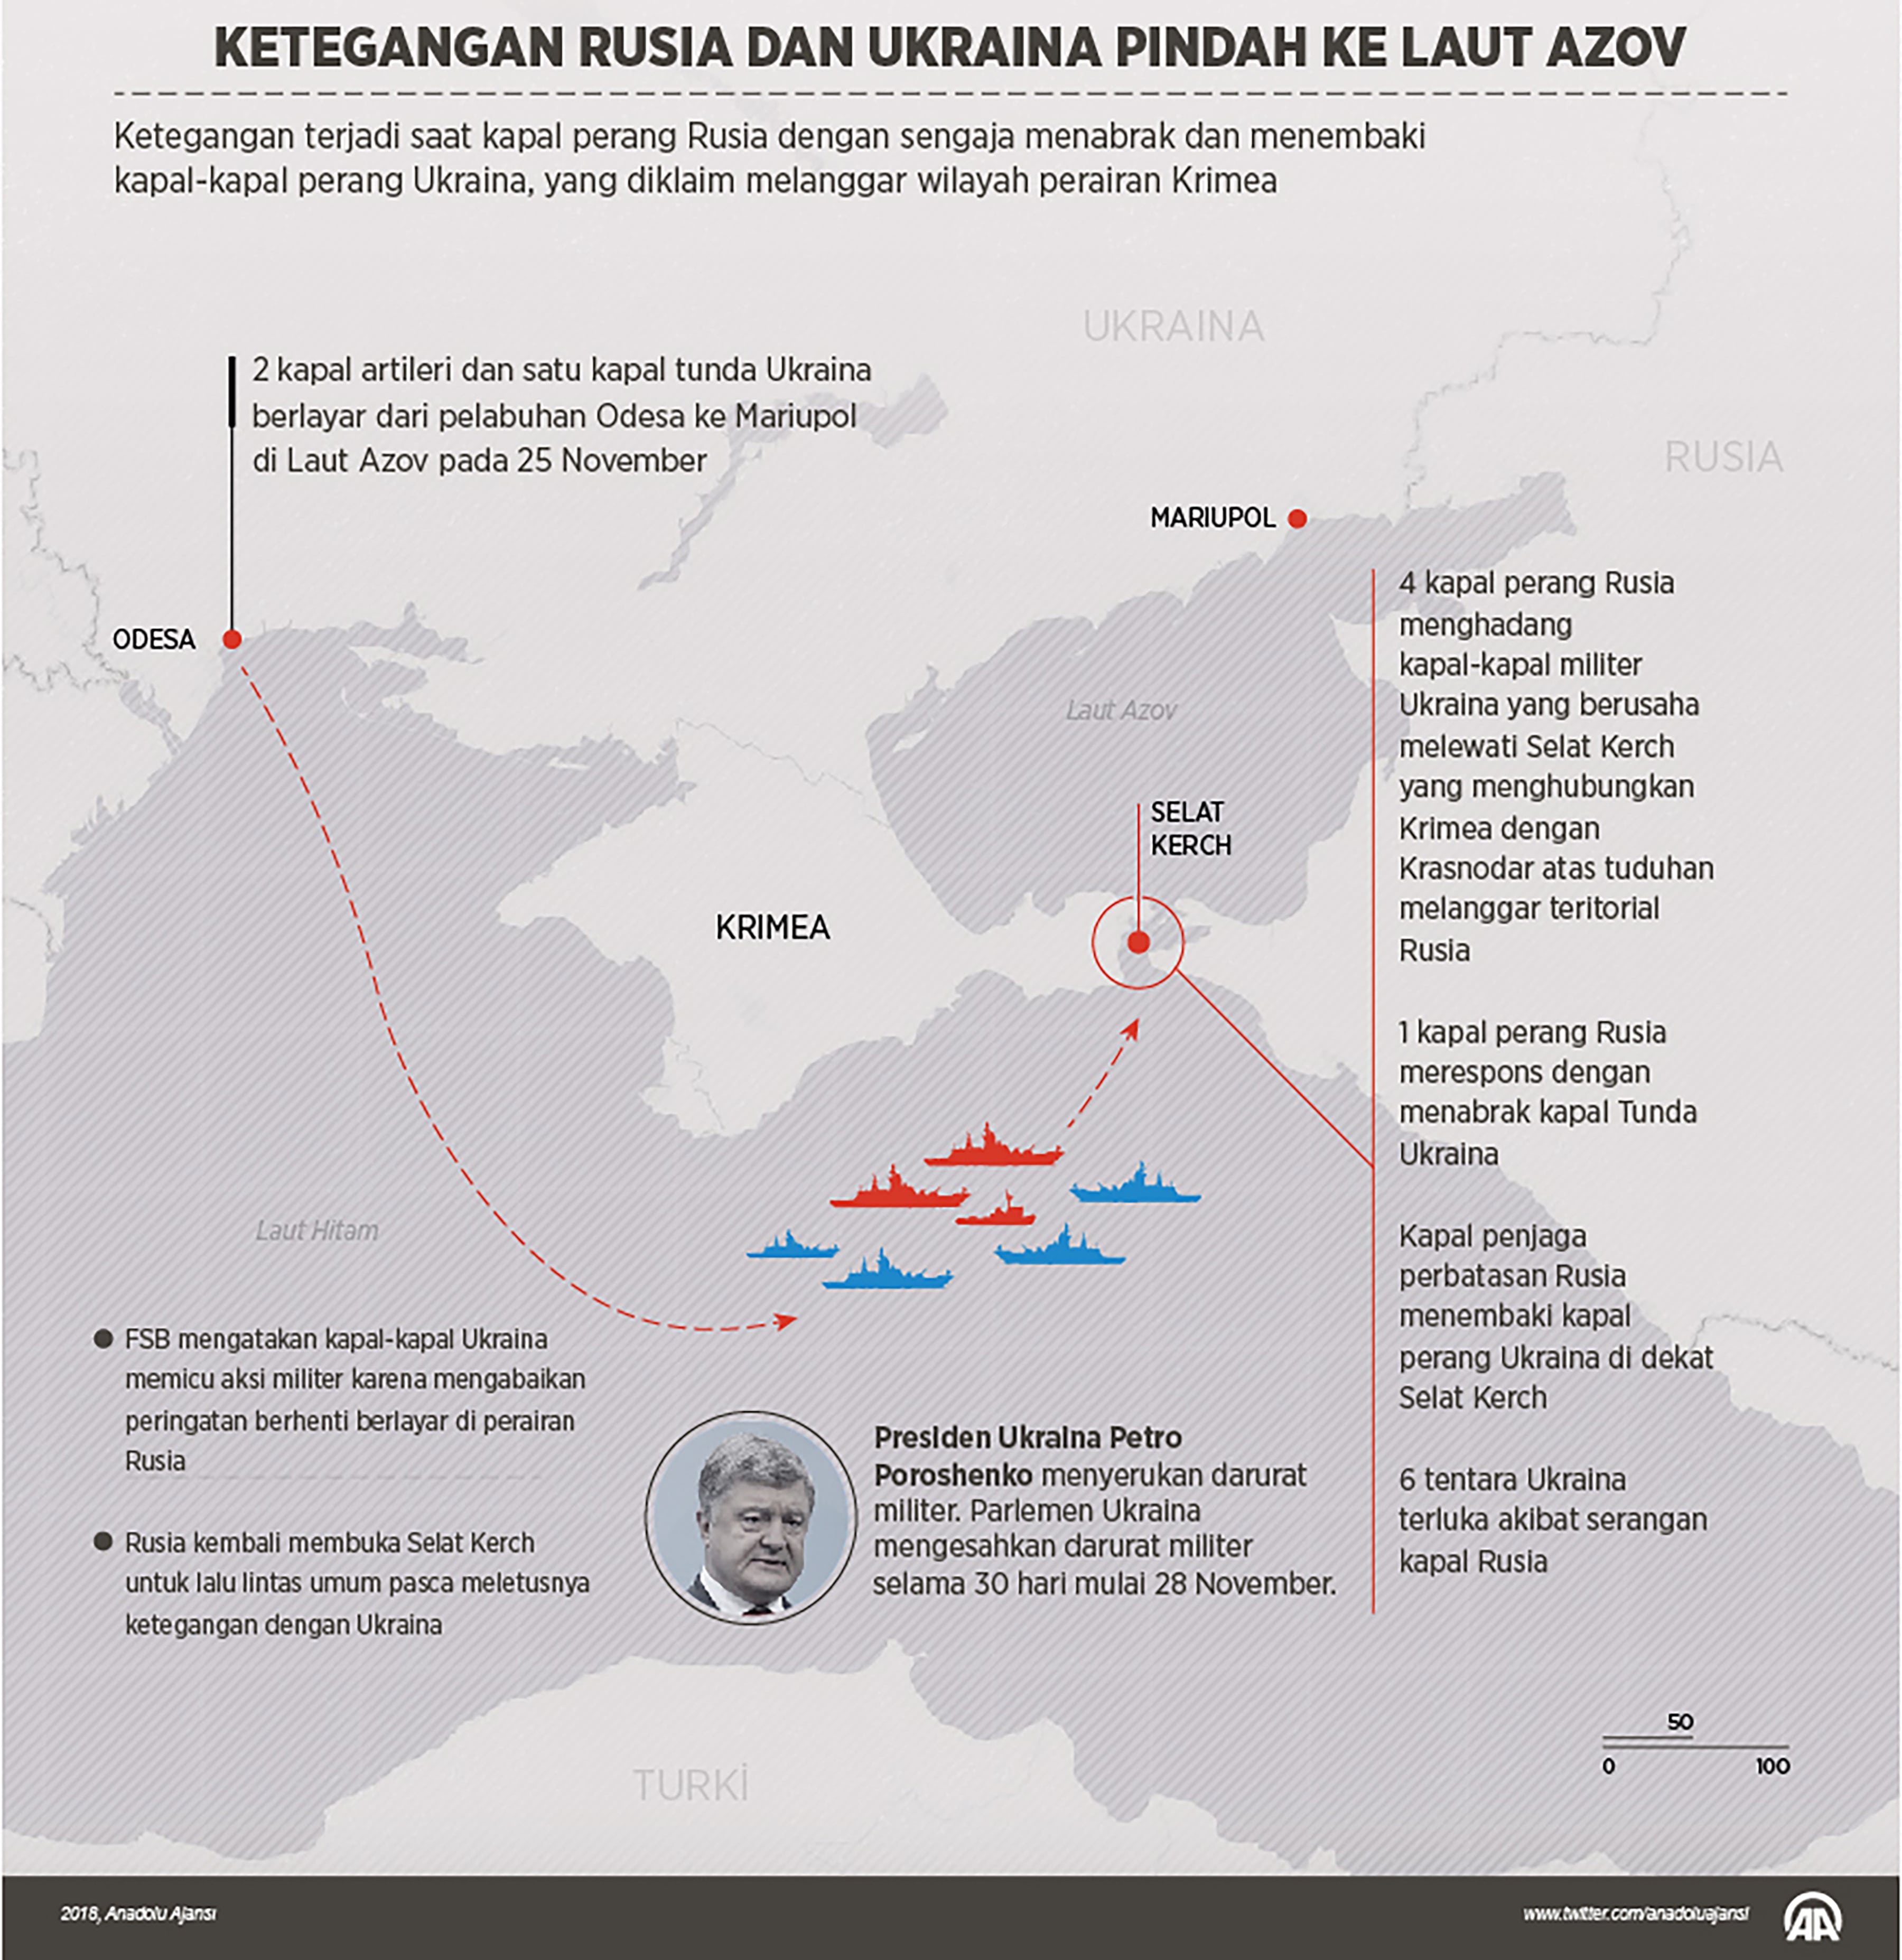 Ketegangan Rusia dan Ukraina pindah ke Laut Azov